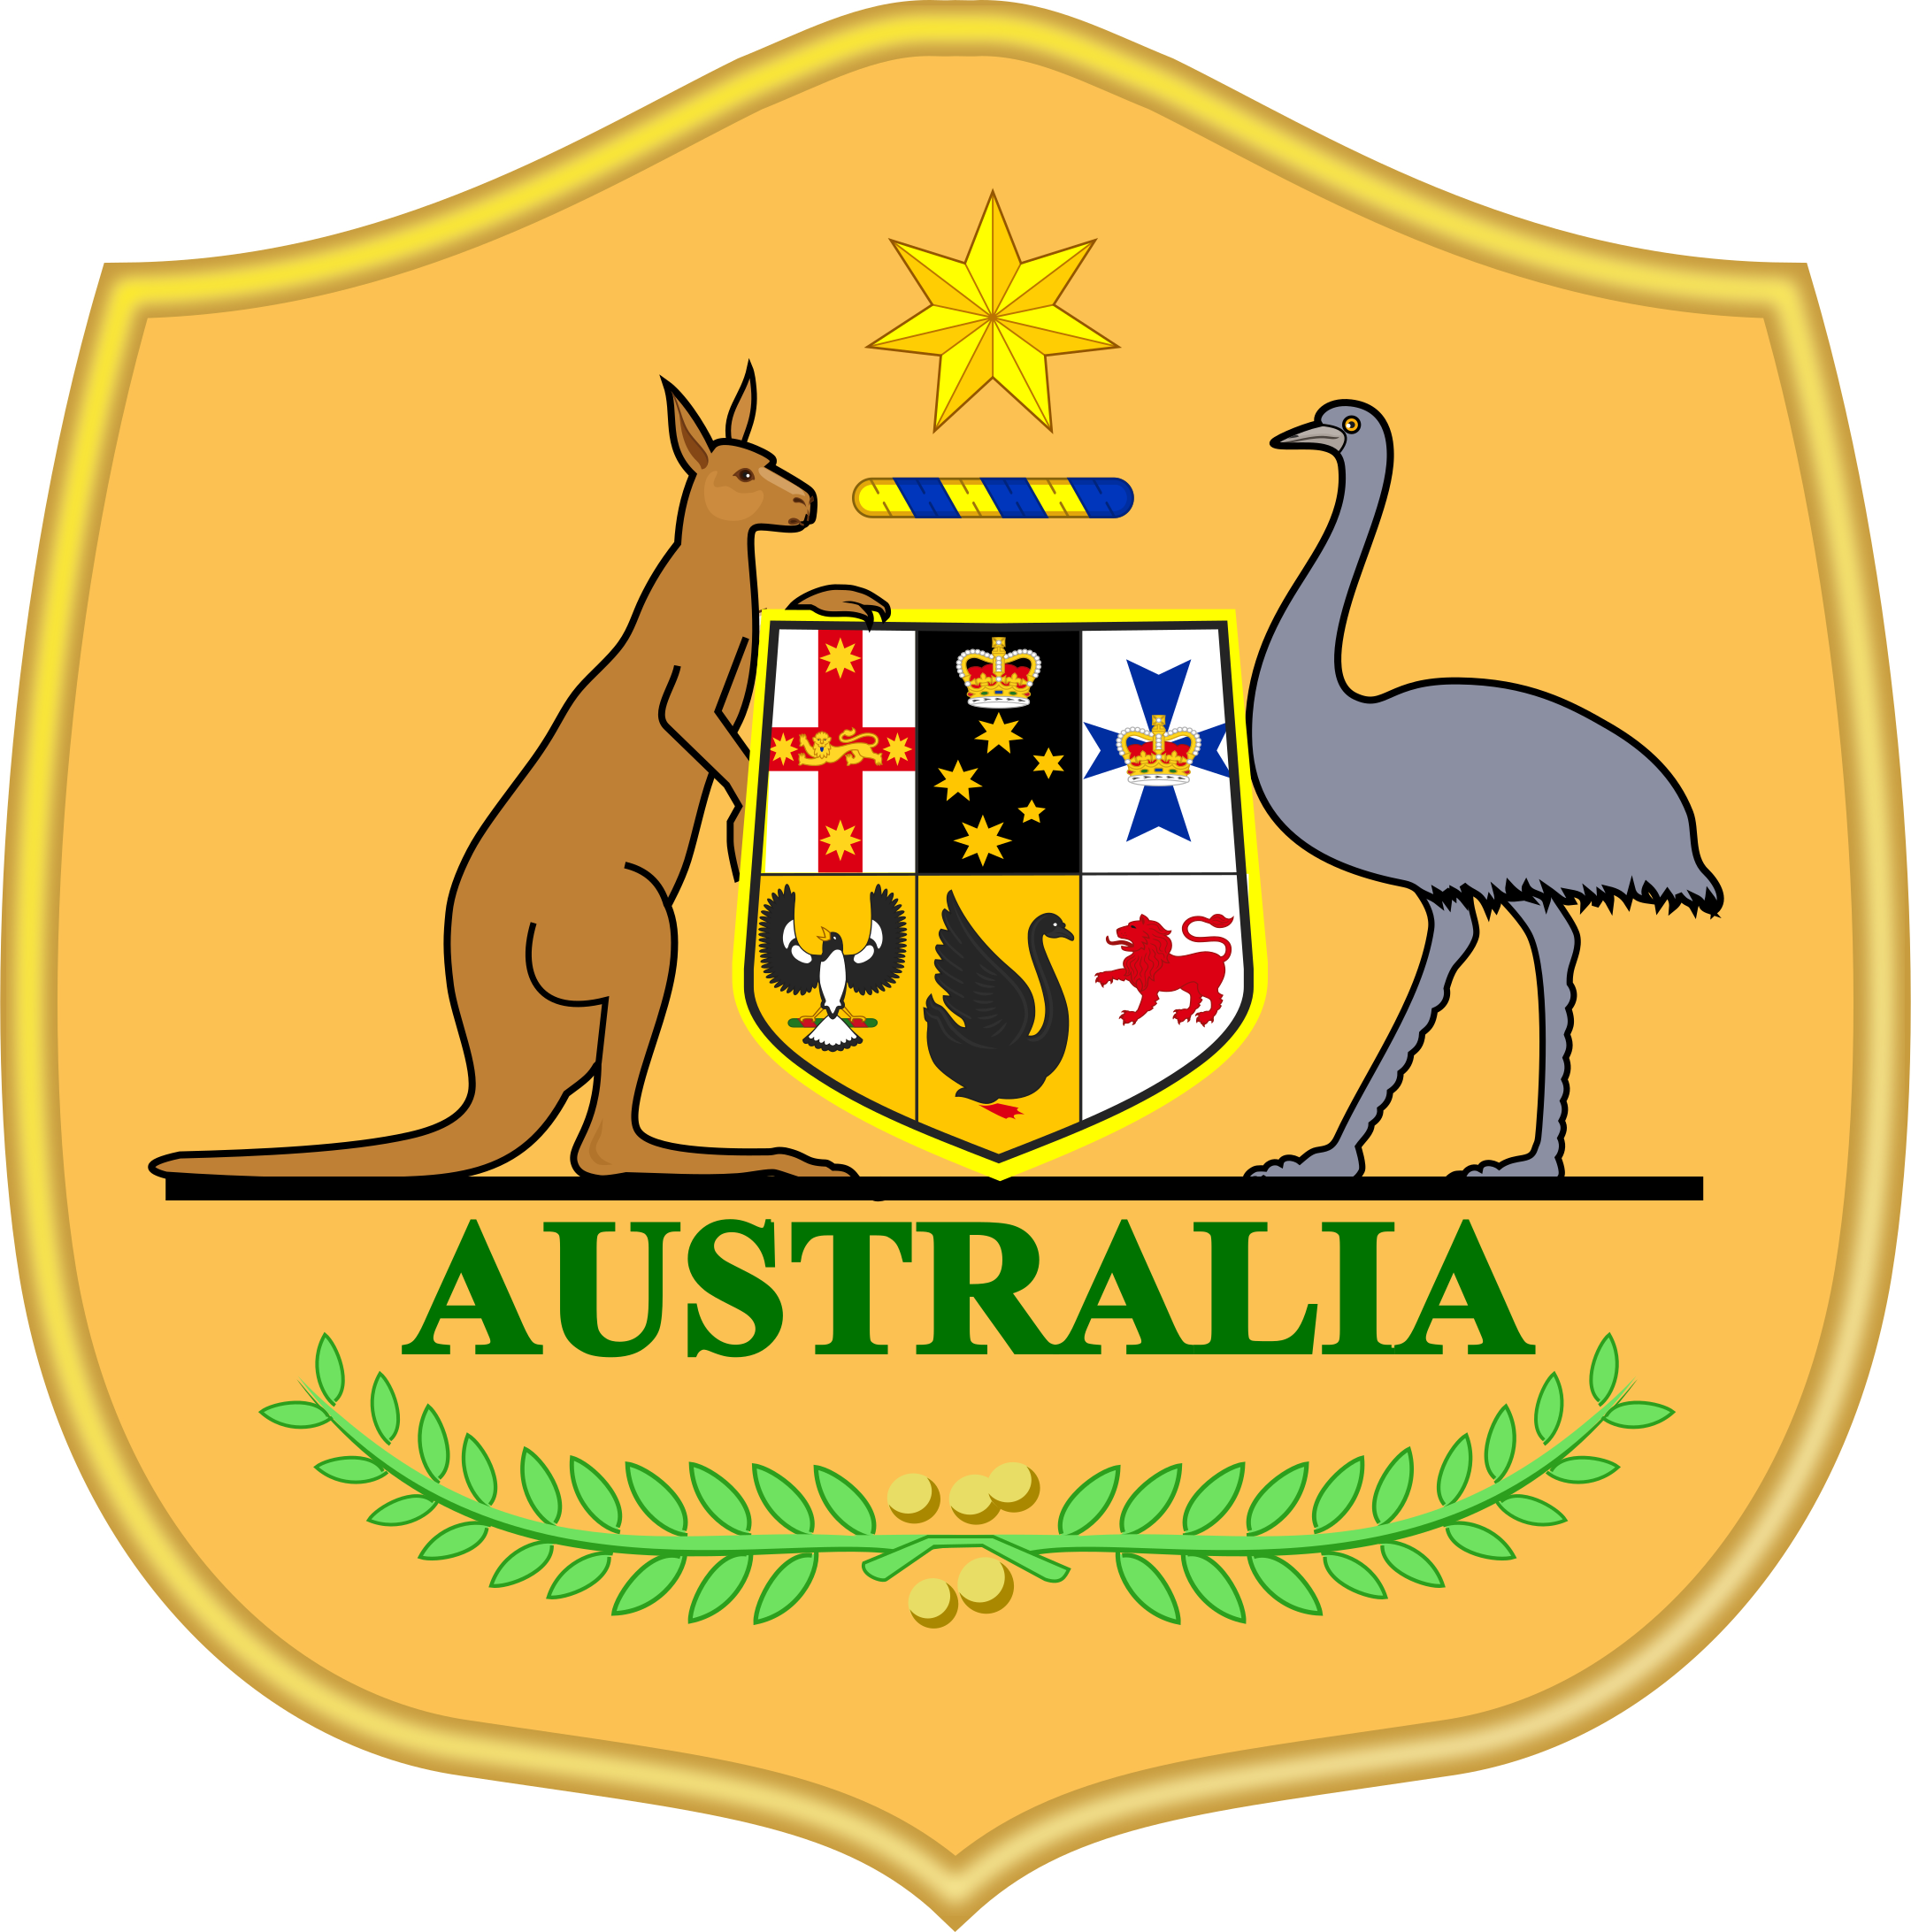 australia national football team logo 1 - Australia National Soccer Team Logo